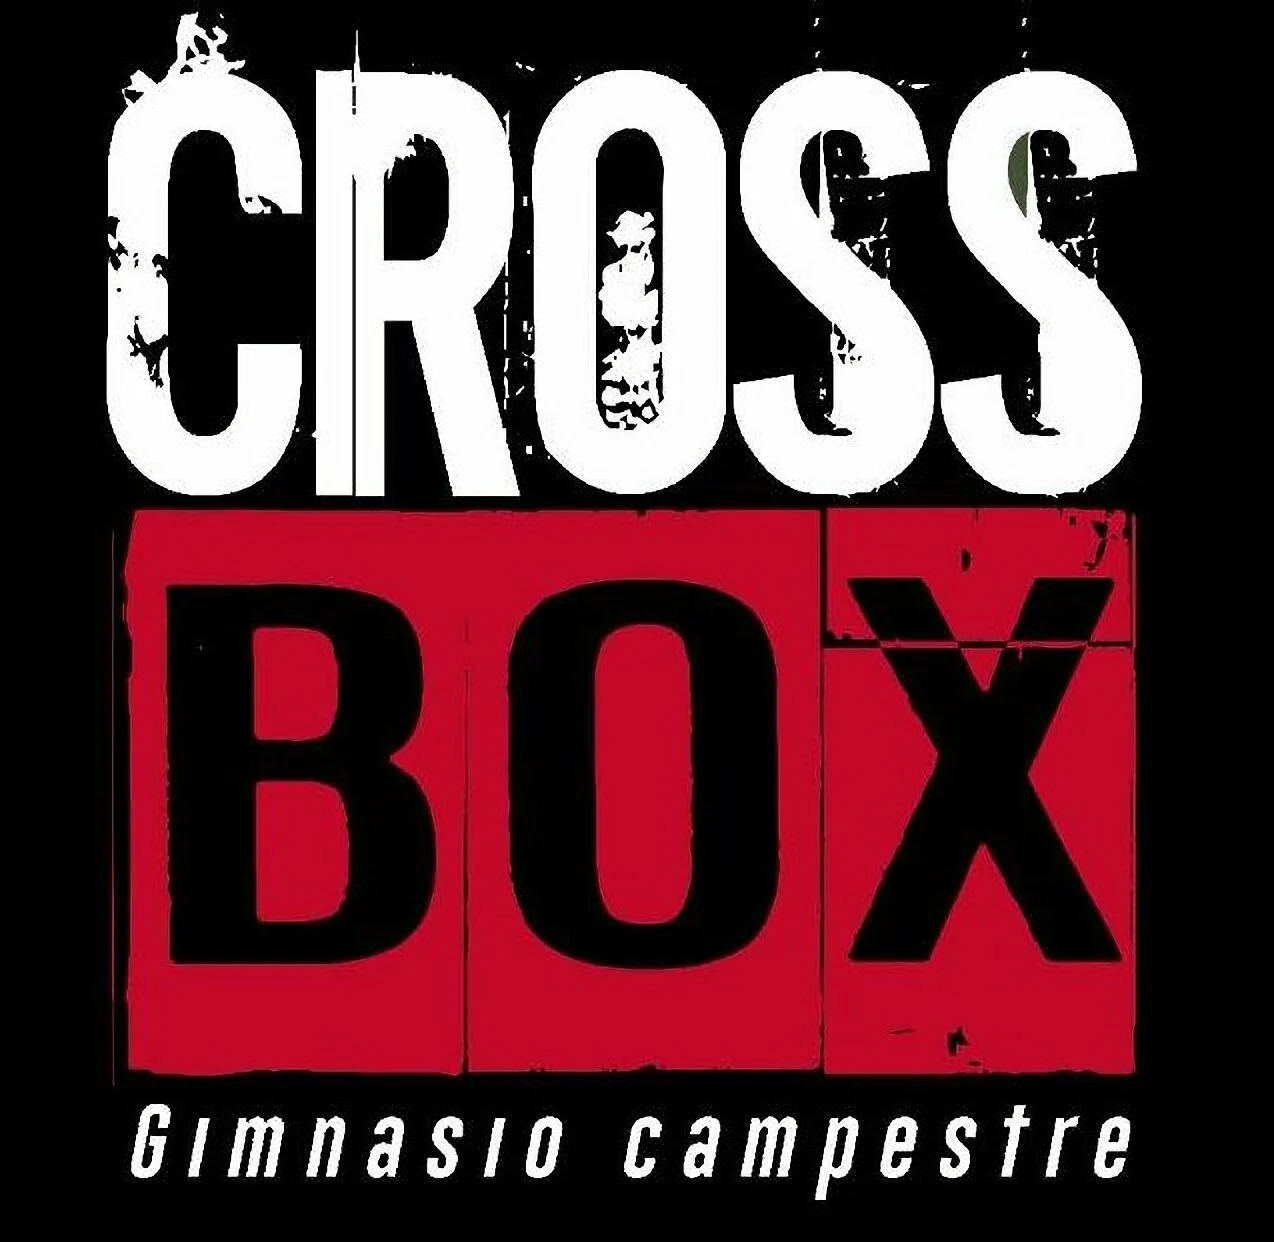 Crossfit-cross-box-gimnasio-campestre-8625